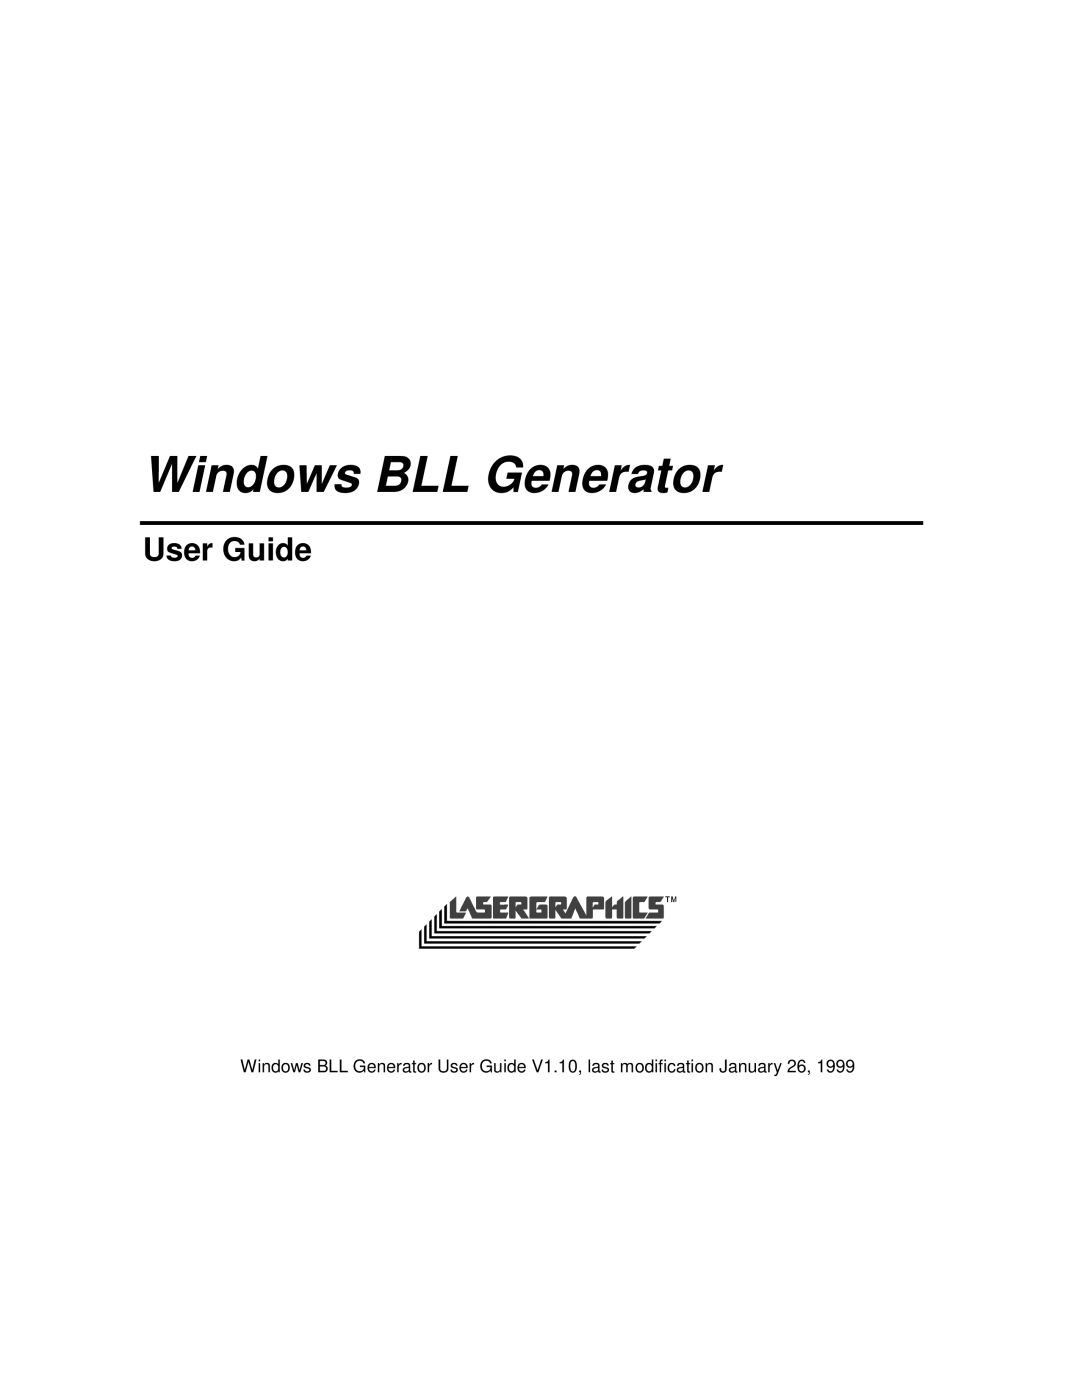 Polaroid manual Windows BLL Generator, User Guide 